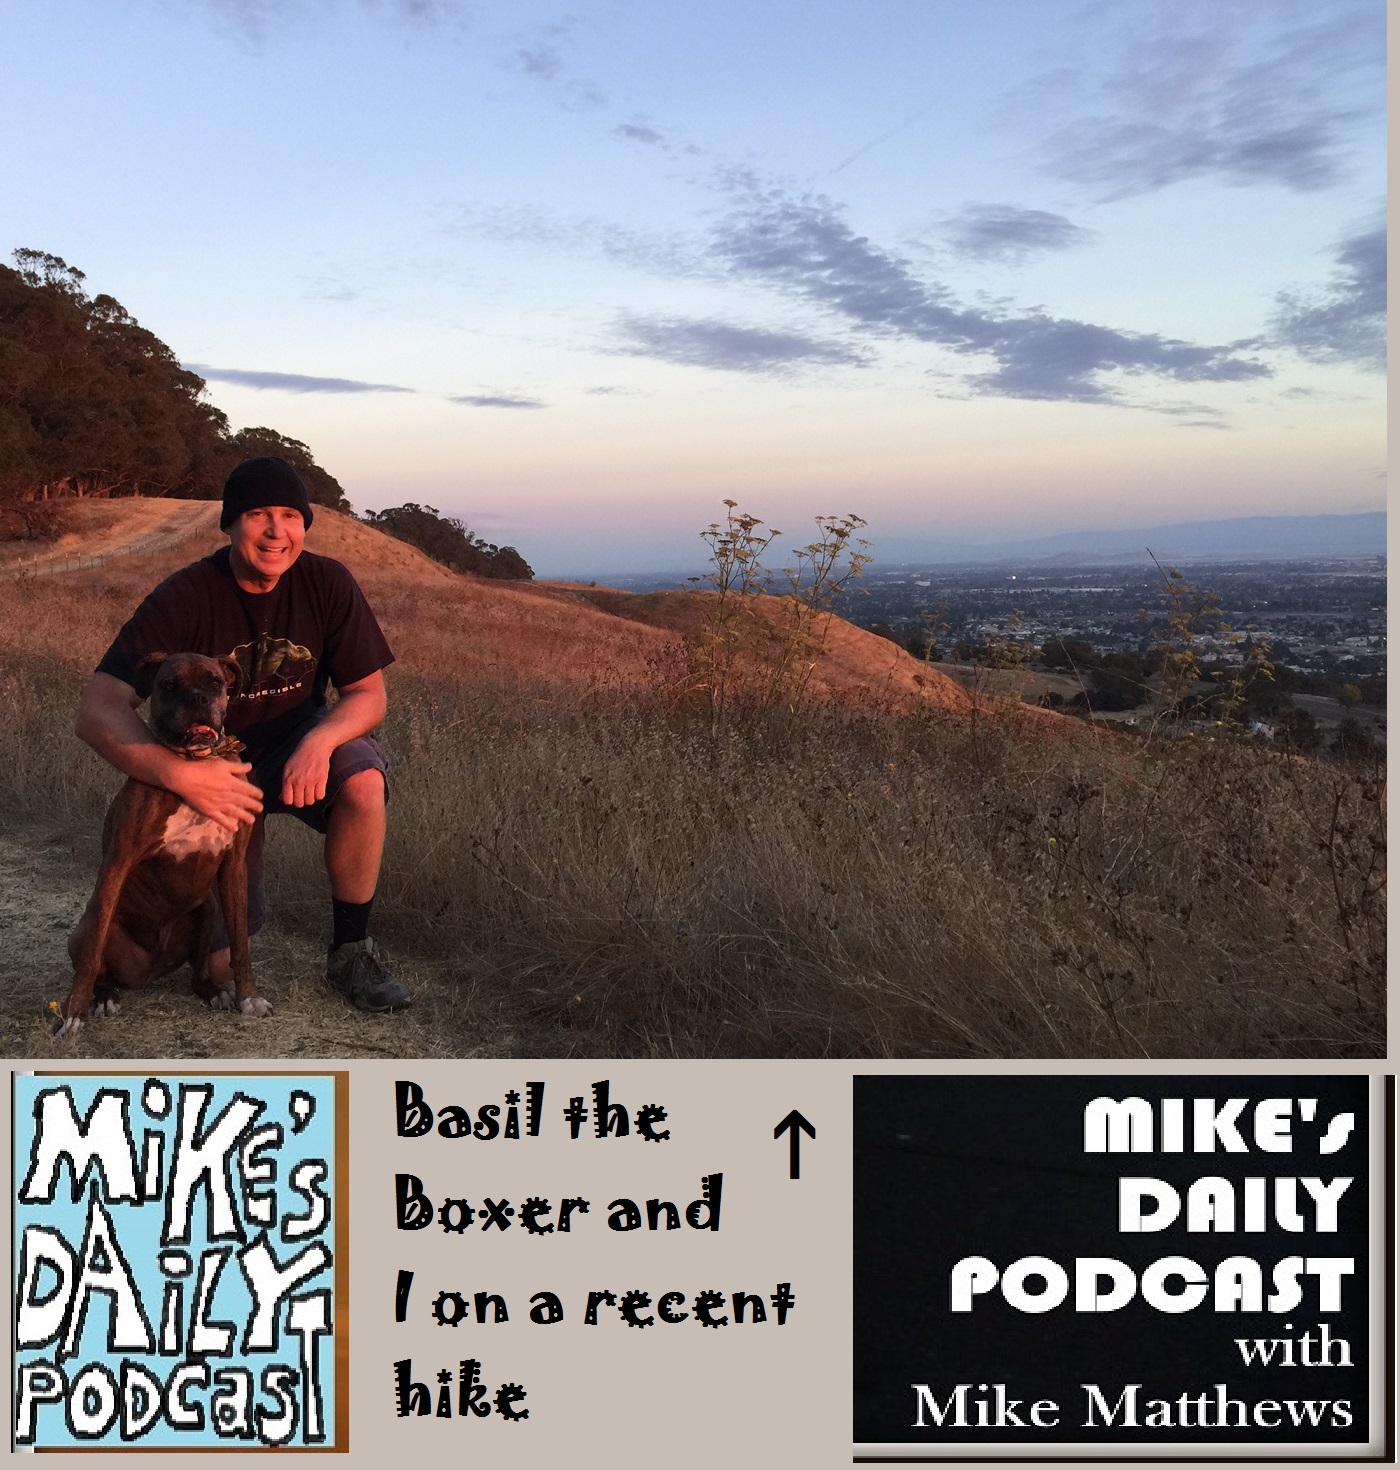 mikes-daily-podcast-1174-basil-the-boxer-fairmont-ridge